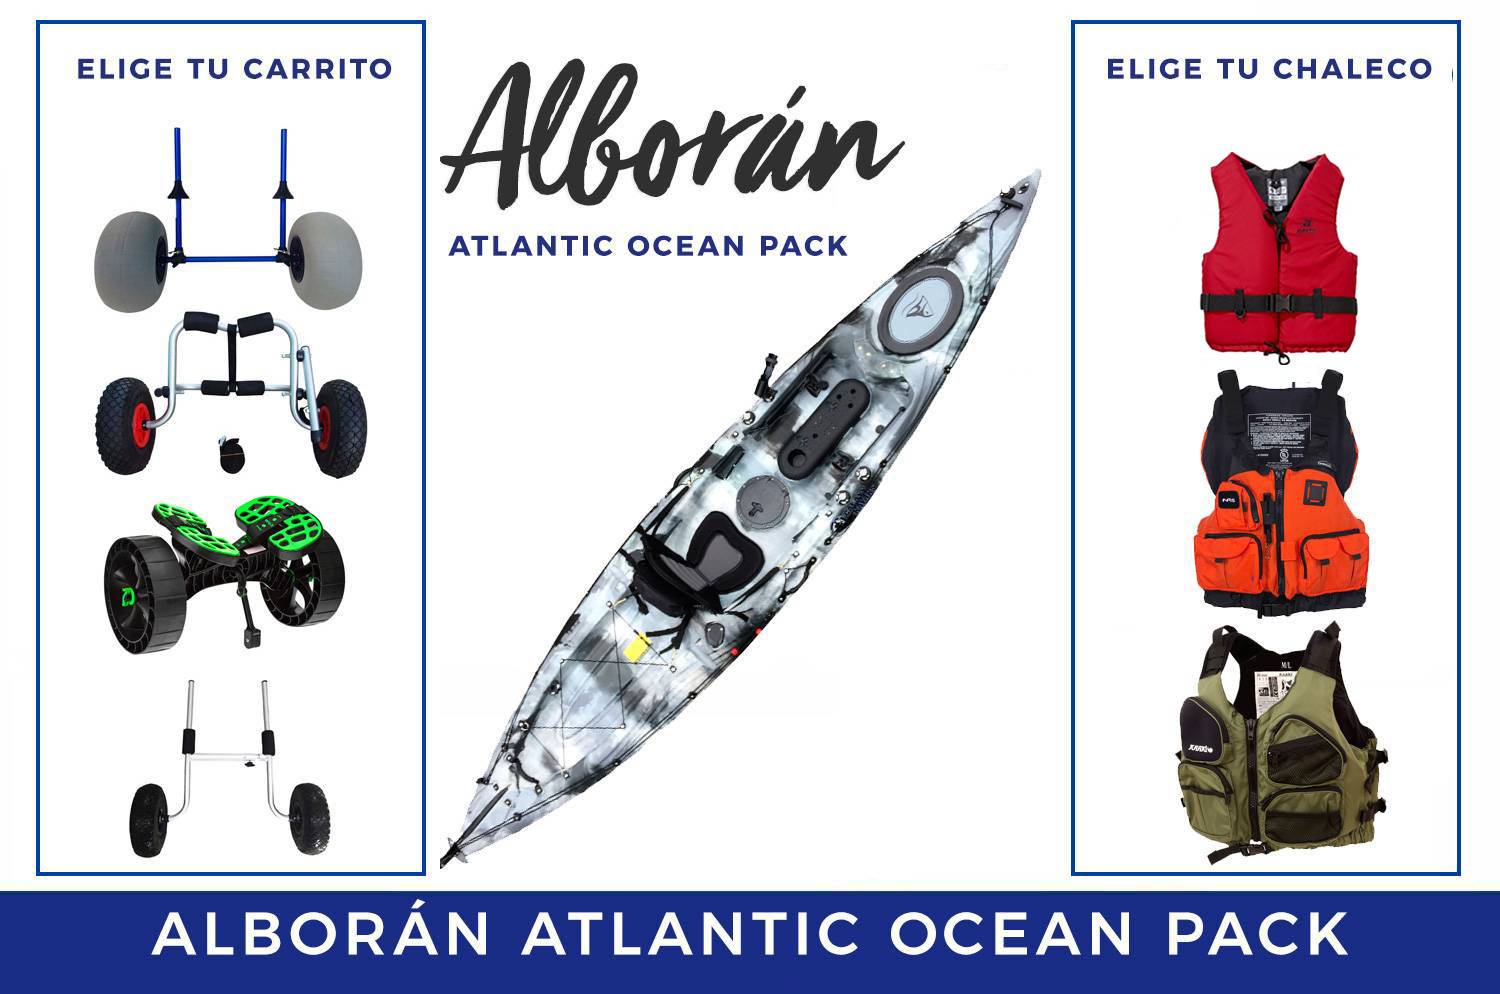 Alborán Atlantic Ocean Pack